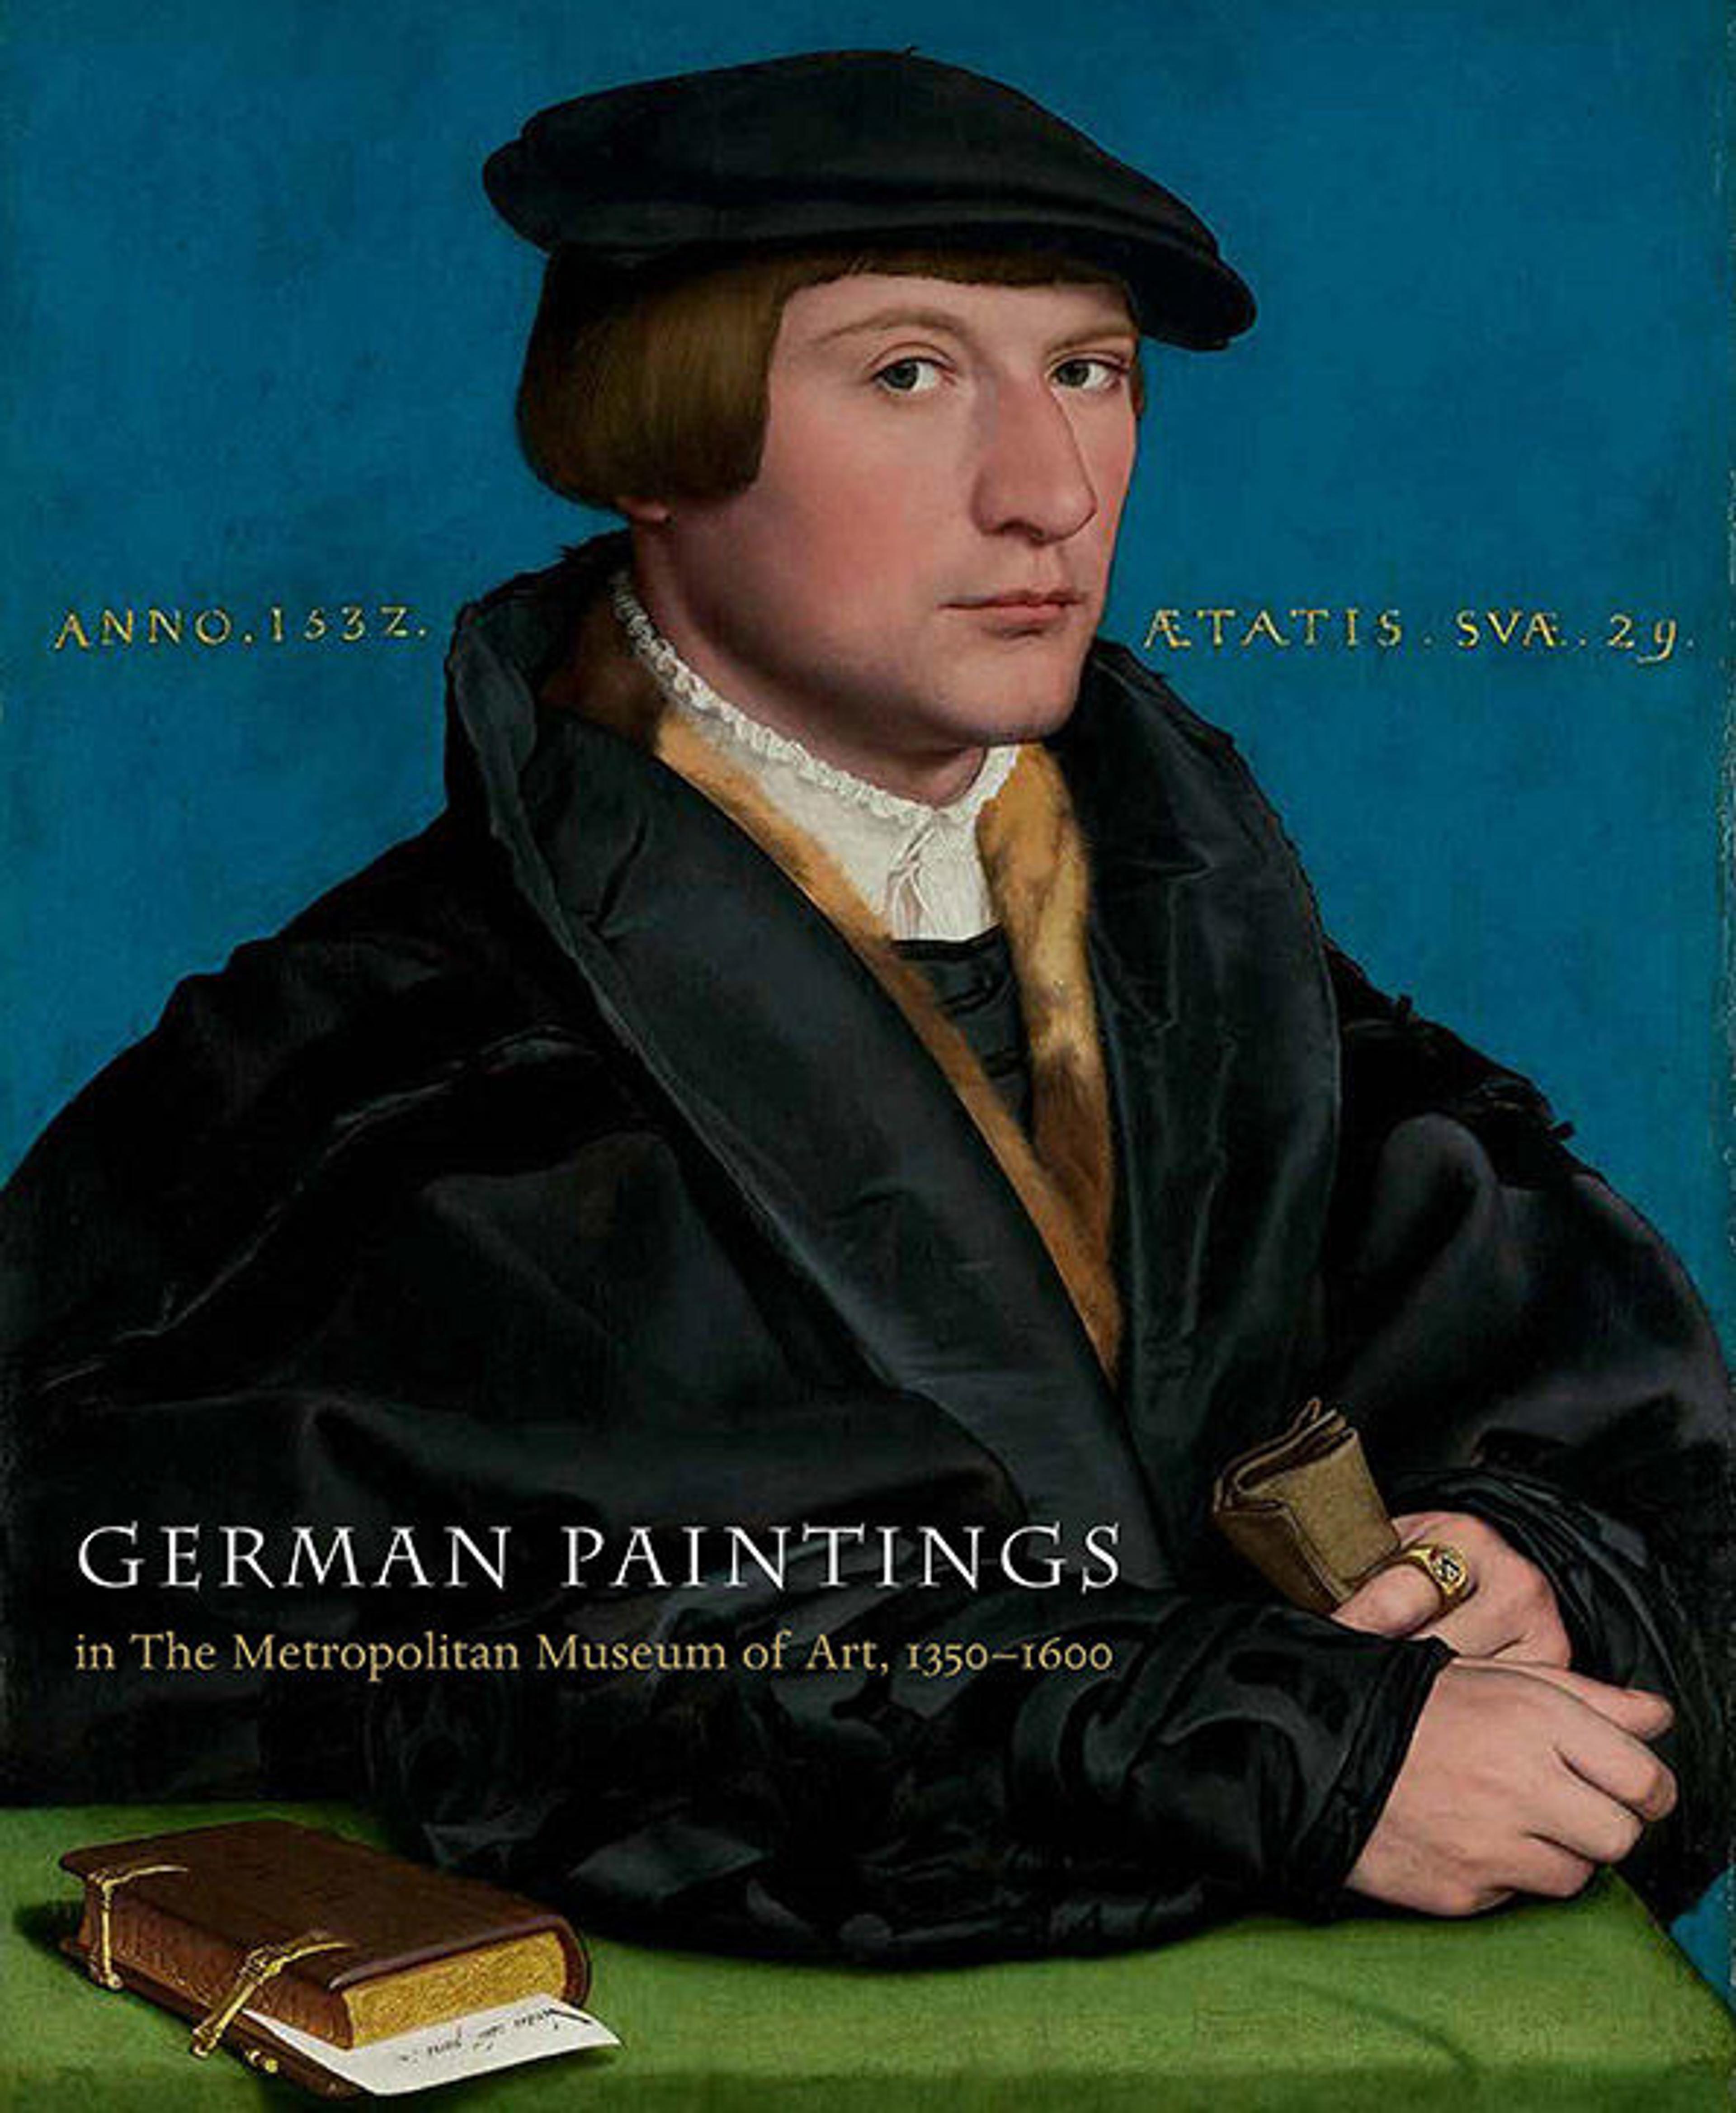 'German Paintings in The Metropolitan Museum of Art, 1350–1600' exhibition catalogue